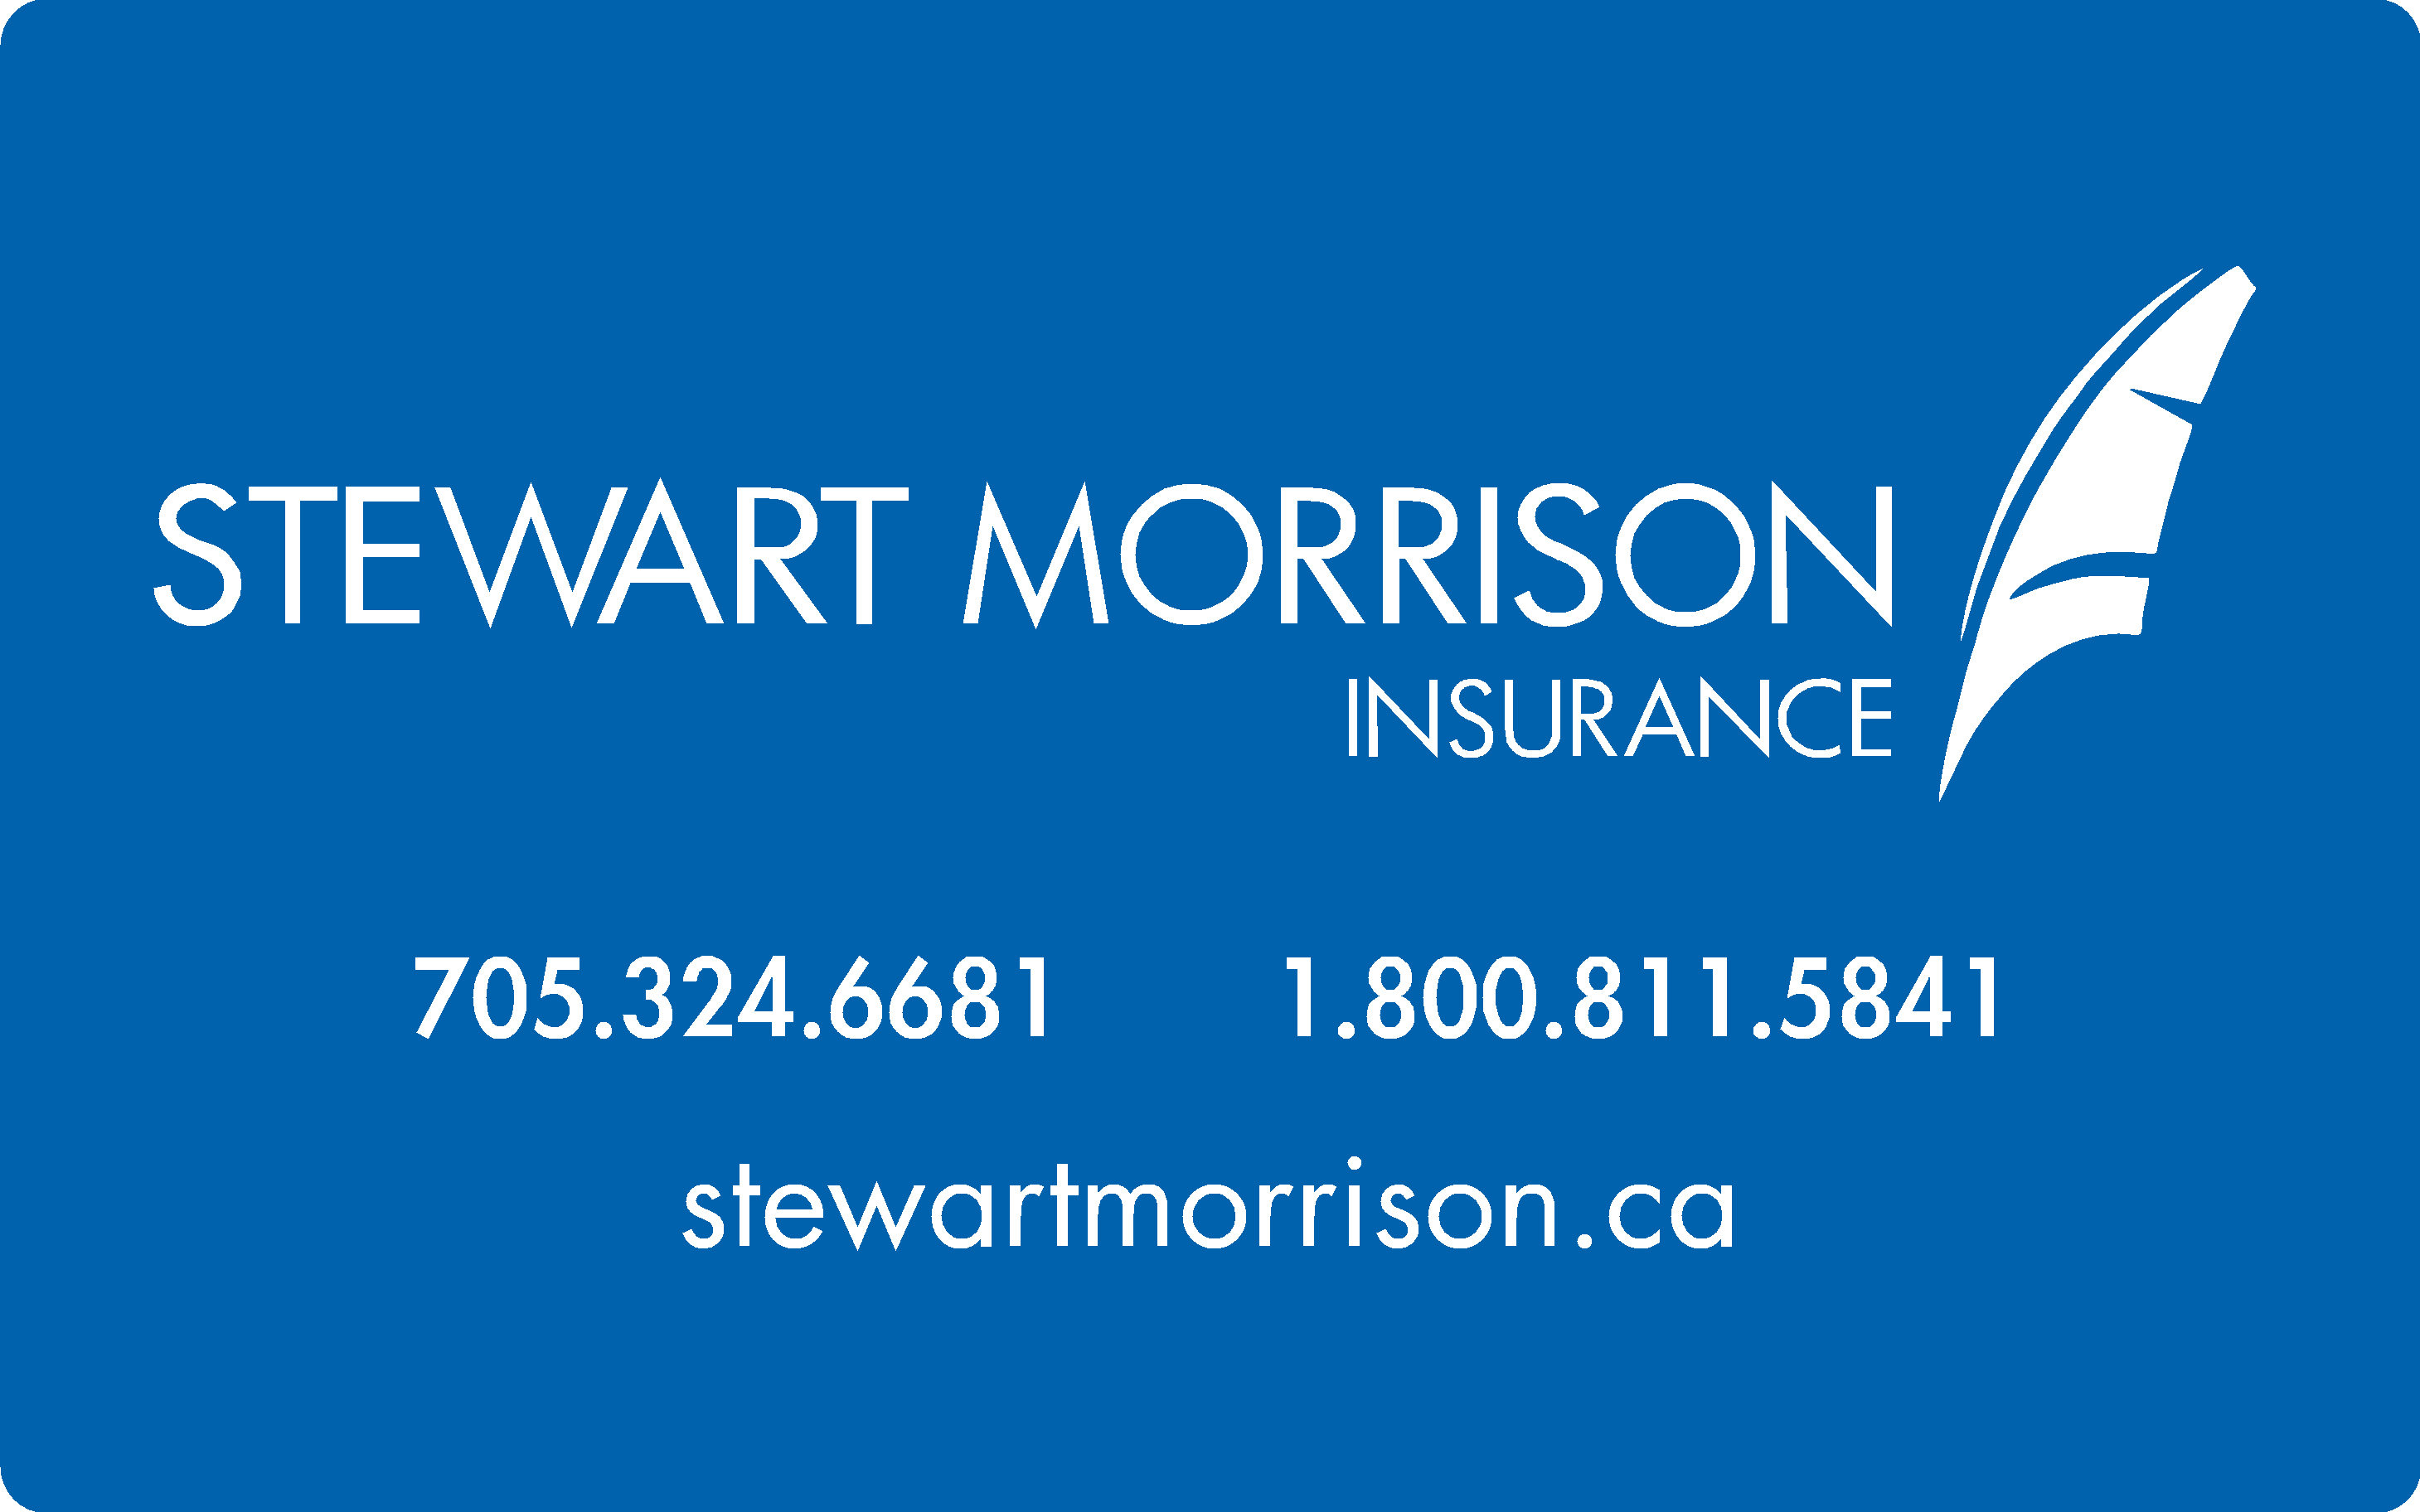 Stewart Morrison Insurance